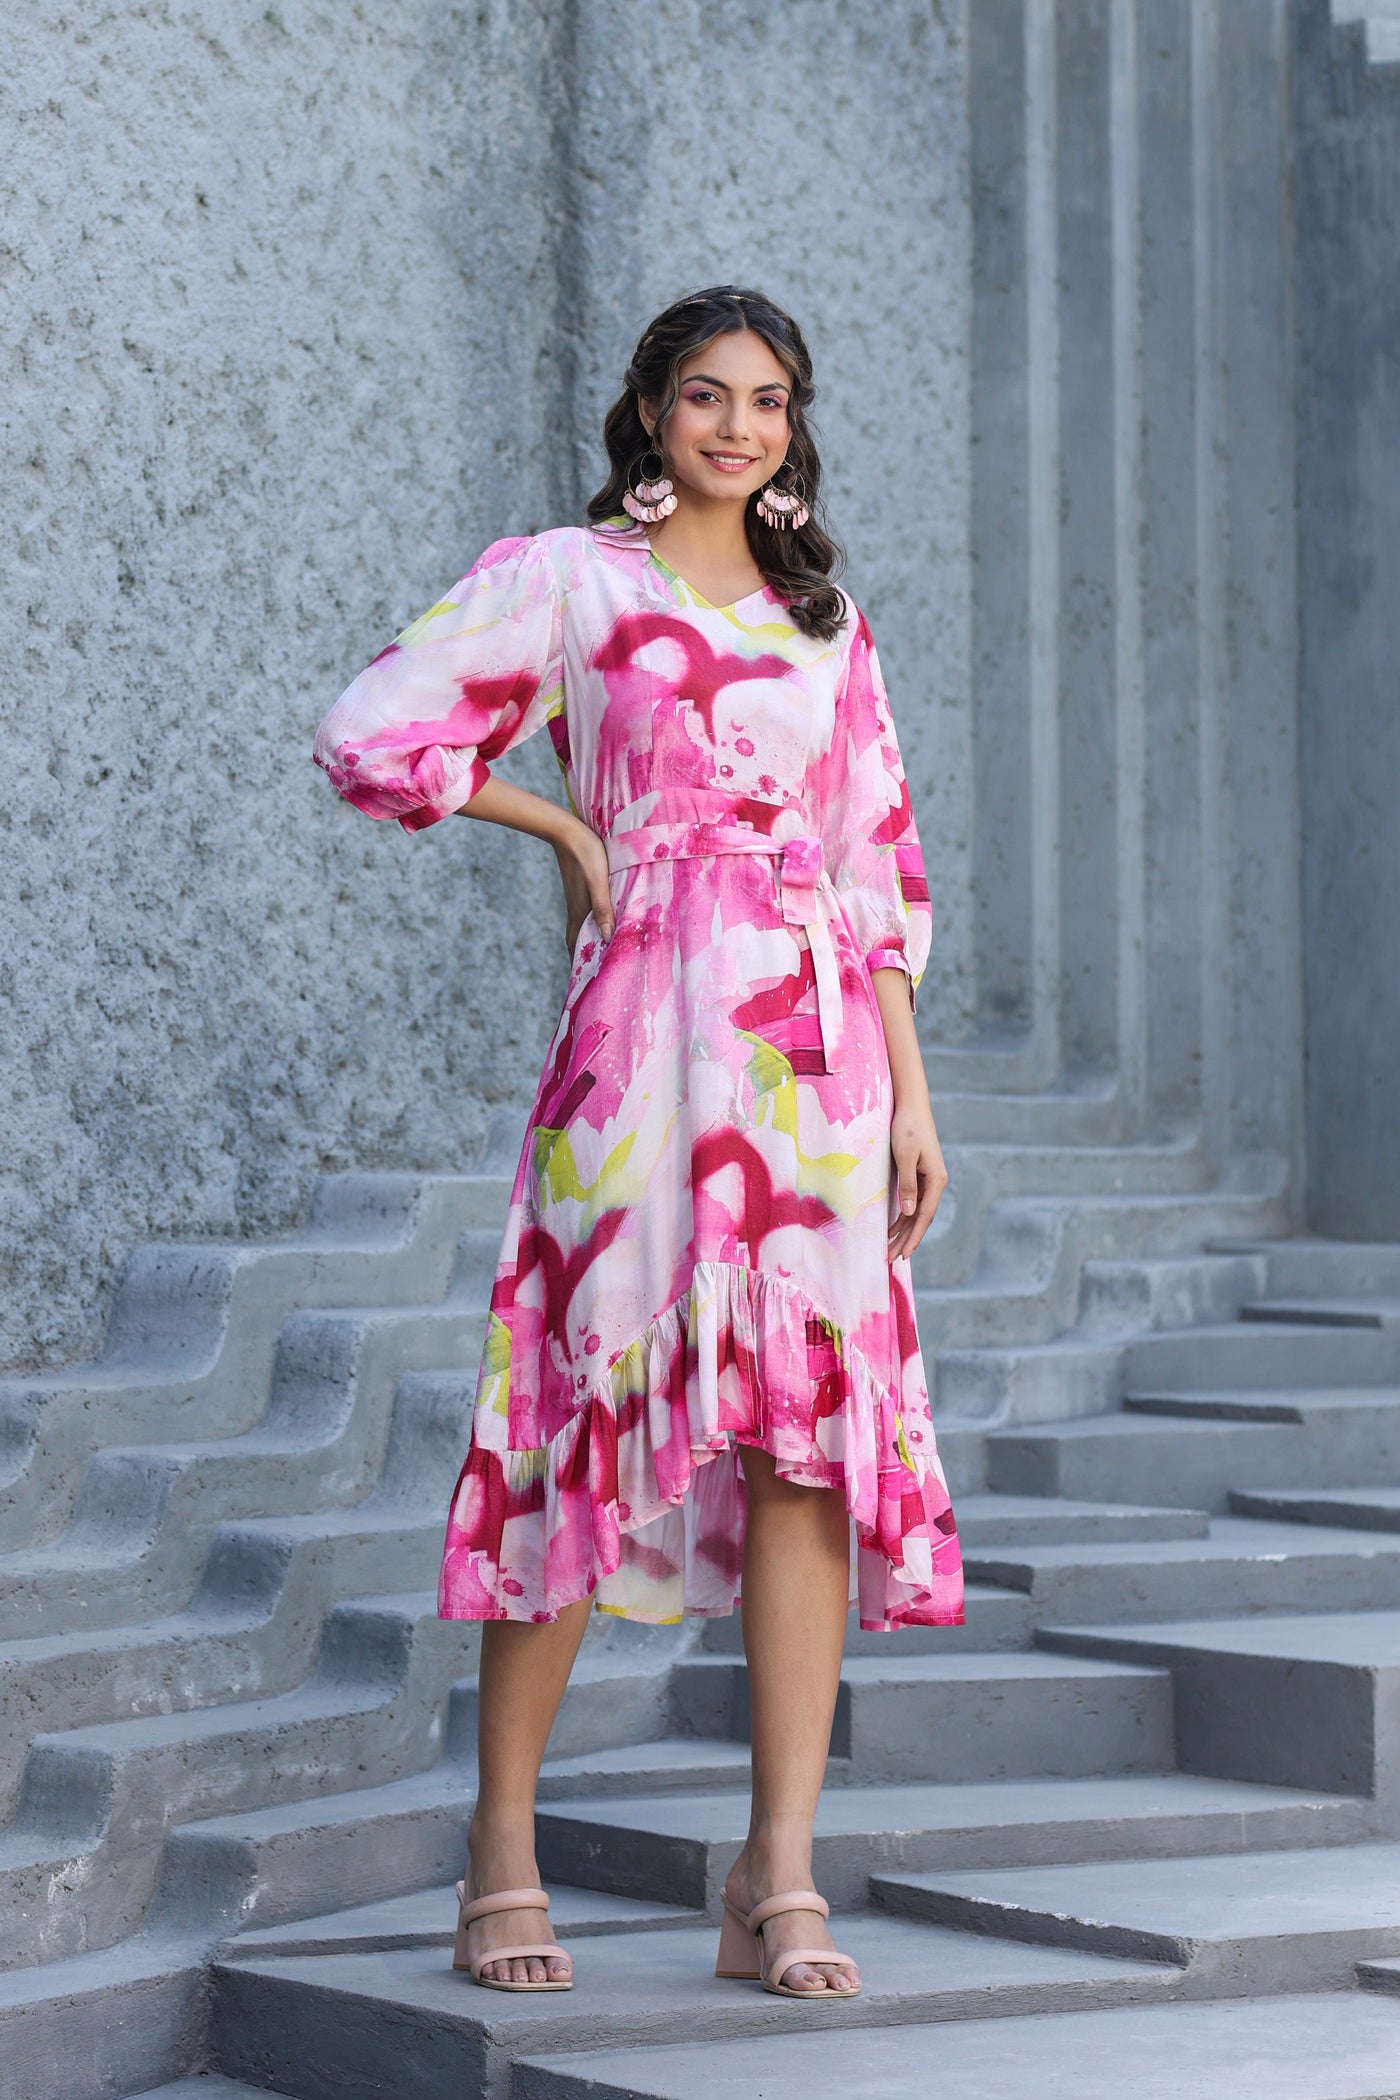 Abstract Pink Hues on Muslin Dress